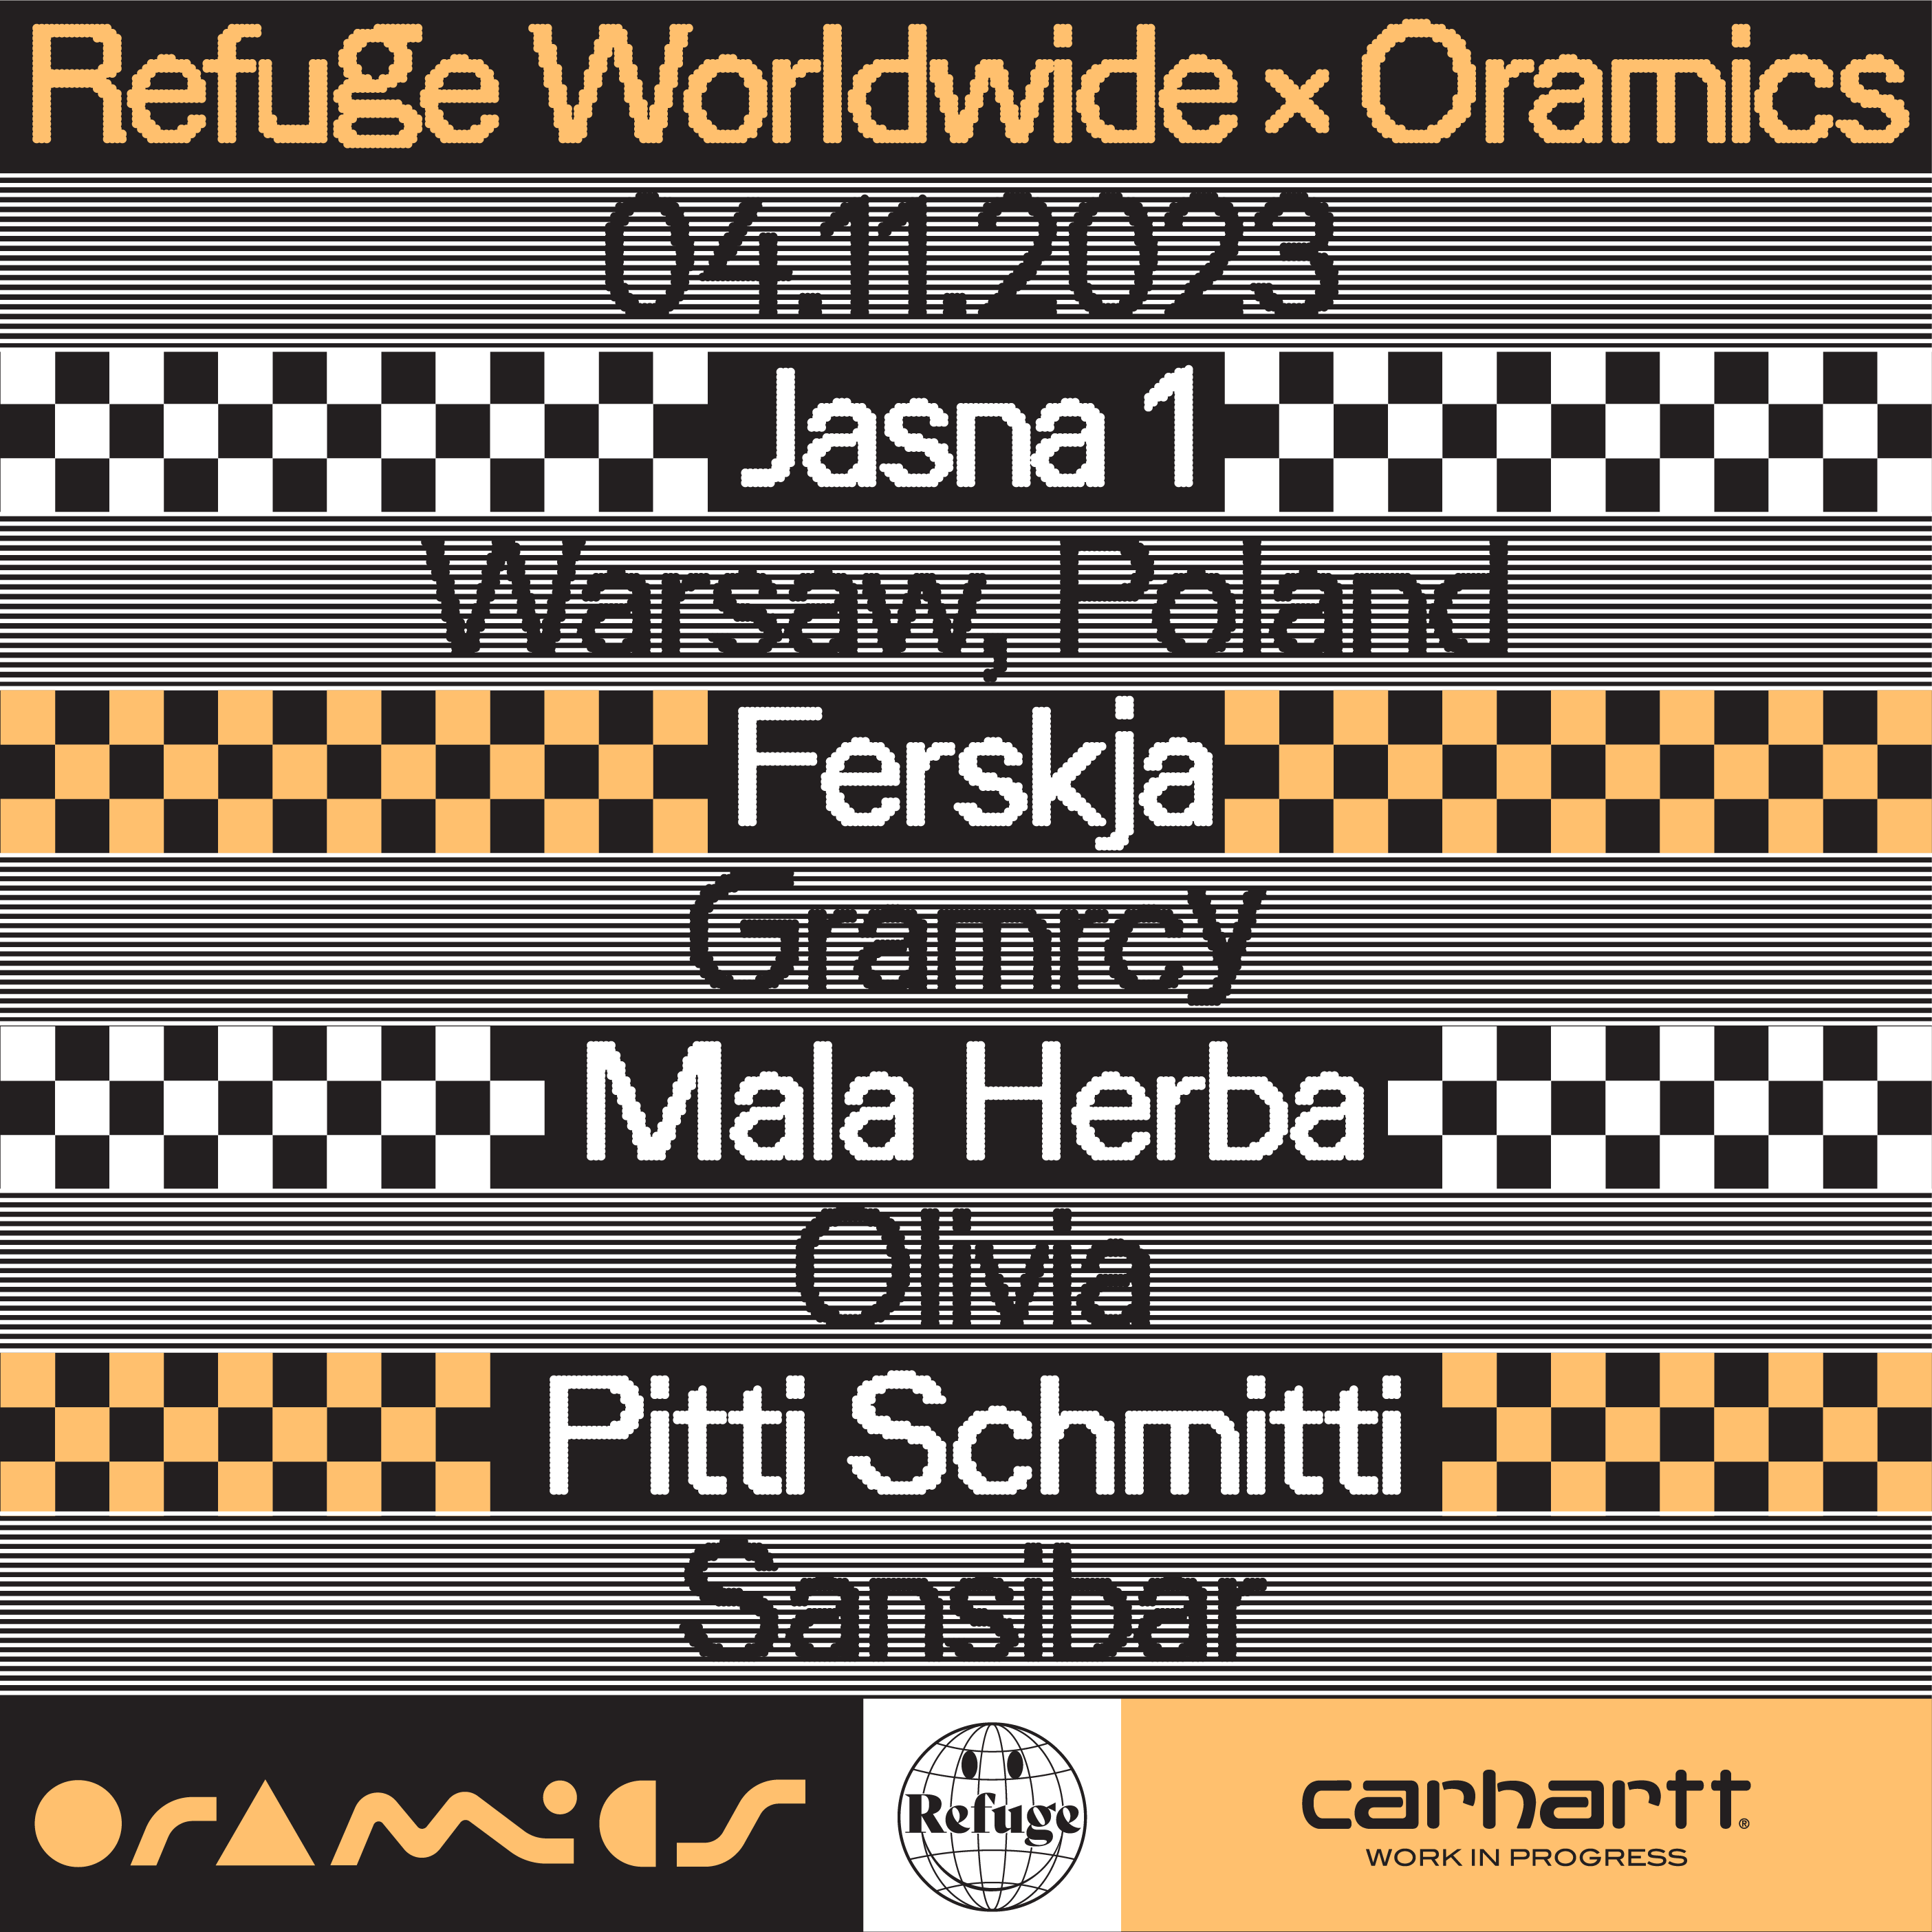 Refuge Worldwide x Oramics - フライヤー裏